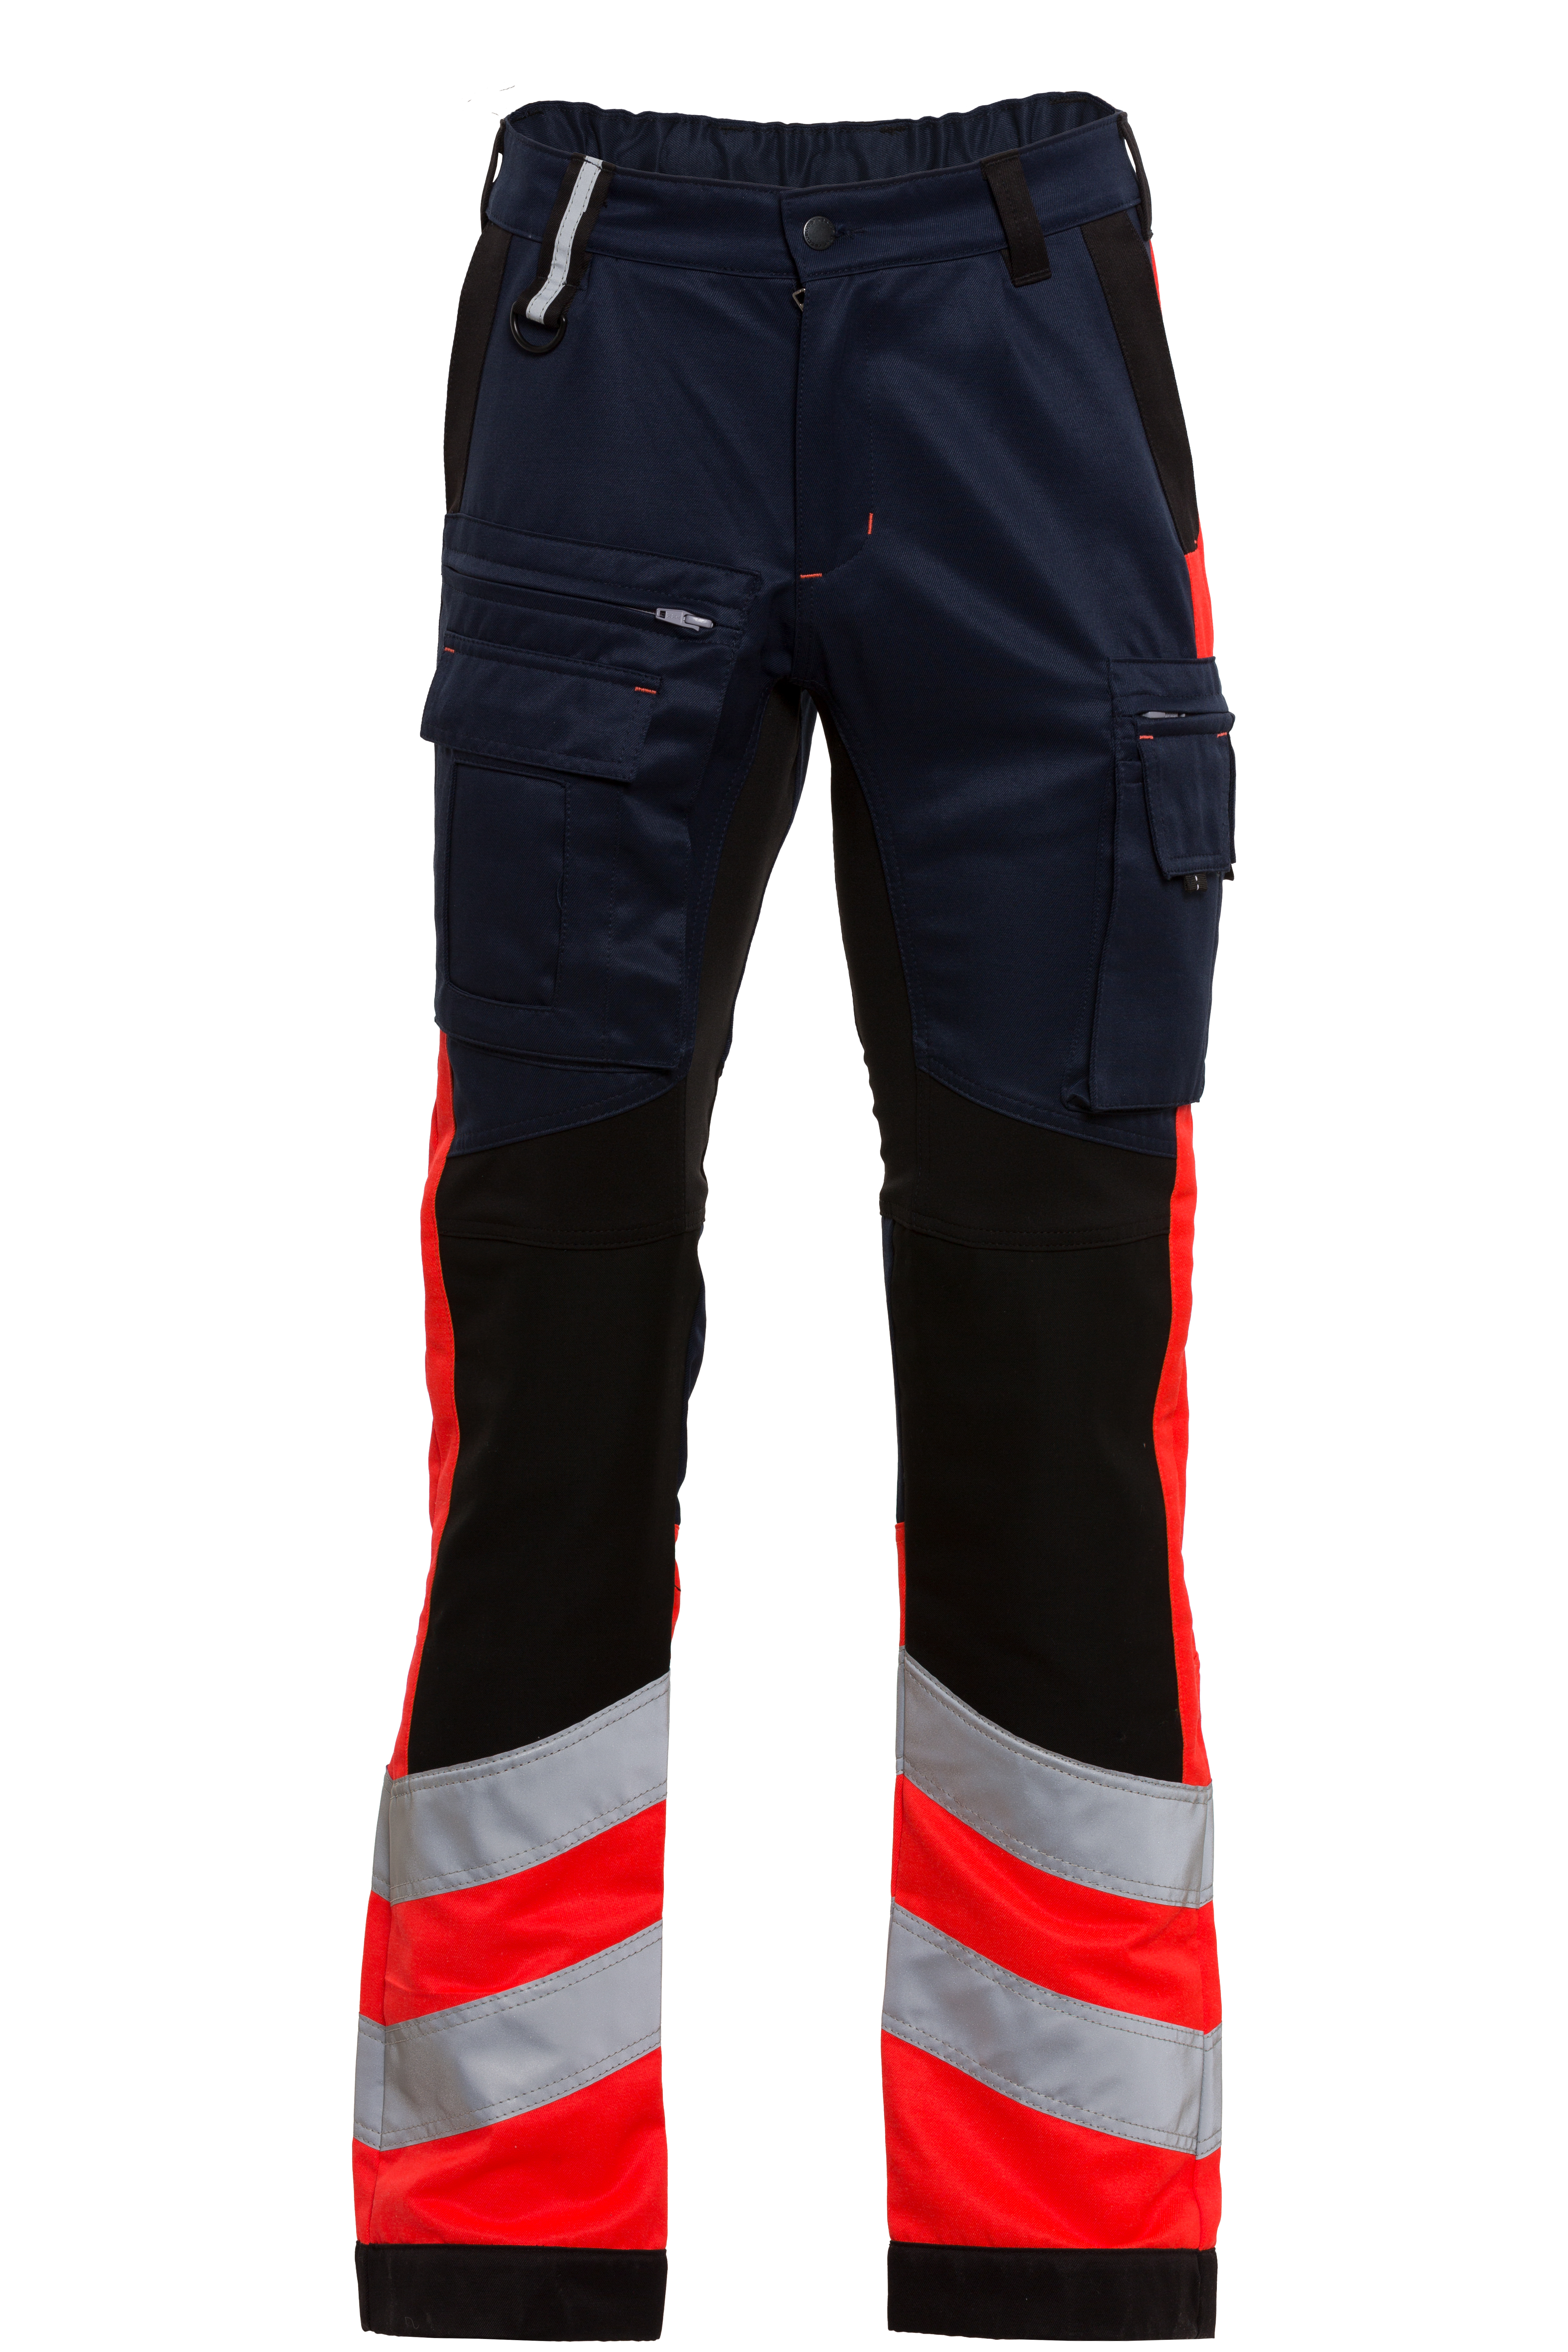 Rescuewear Unisex Hose Stretch HiVis Klasse 1 Marineblau / Schwarz / Neon Rot  - 56